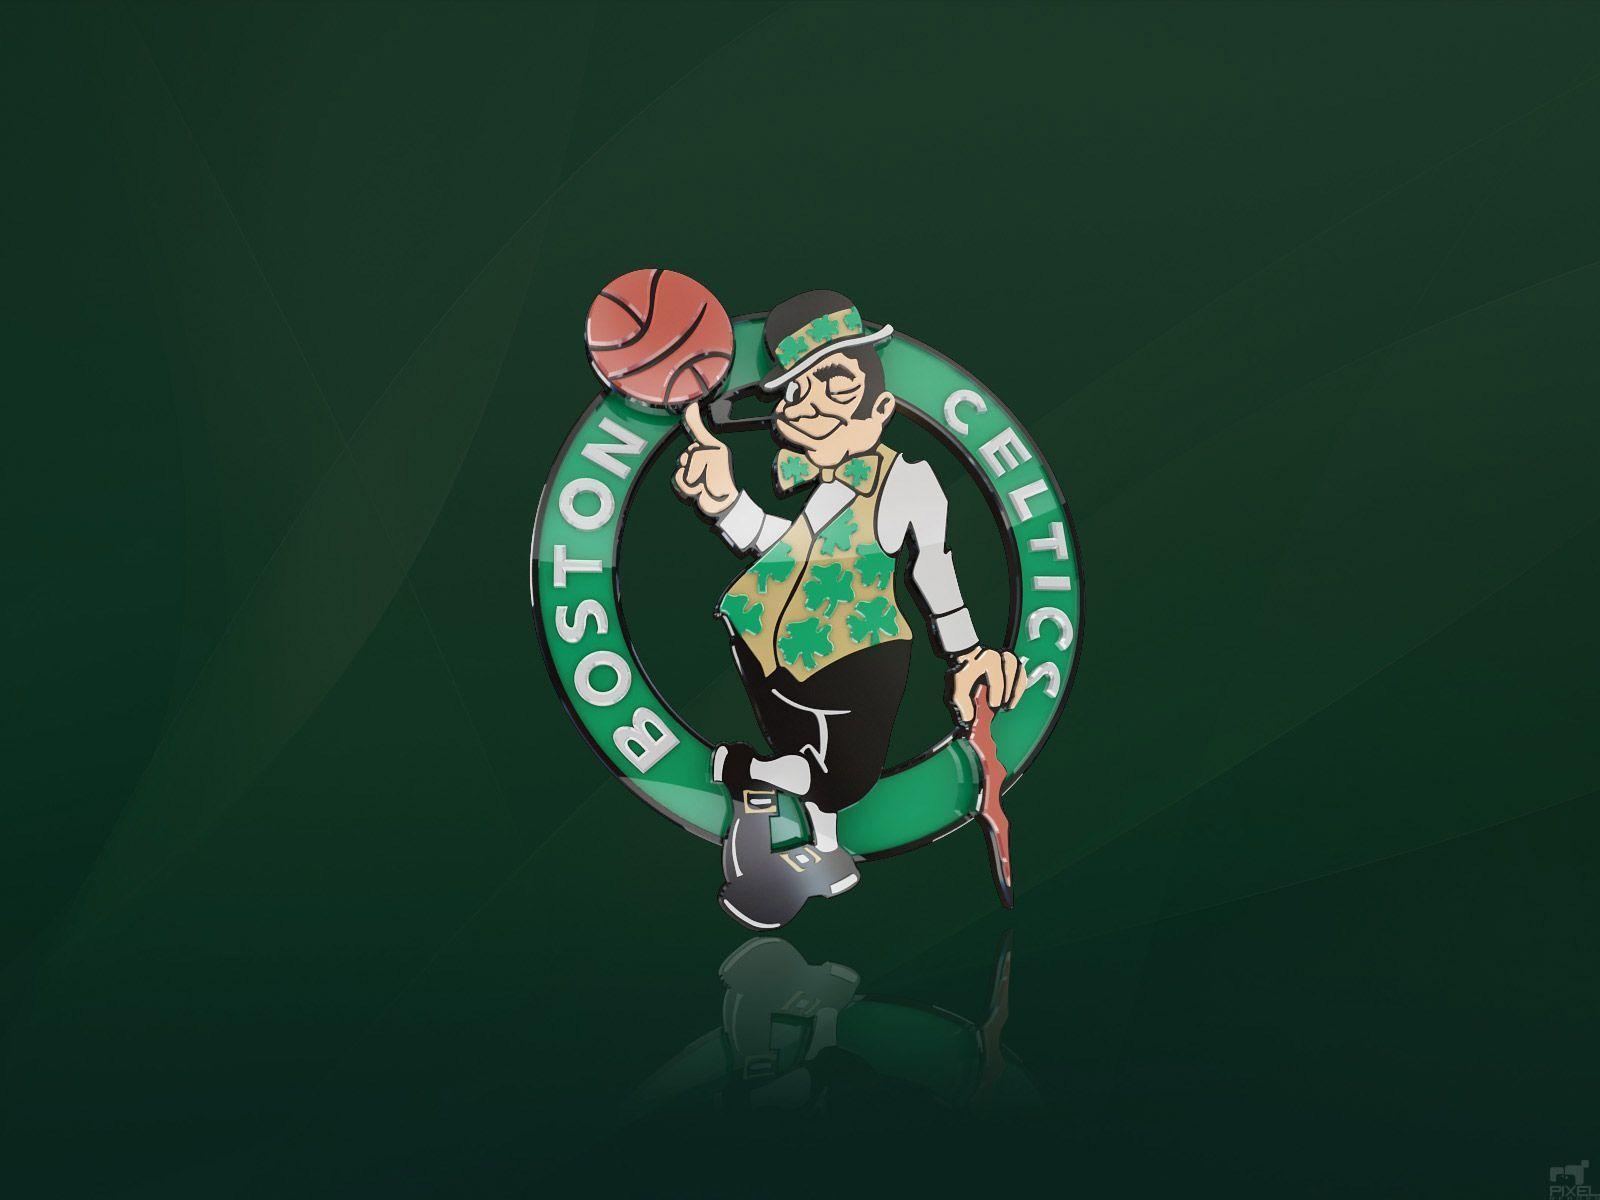 Boston Celtics Wallpapers at BasketWallpapers